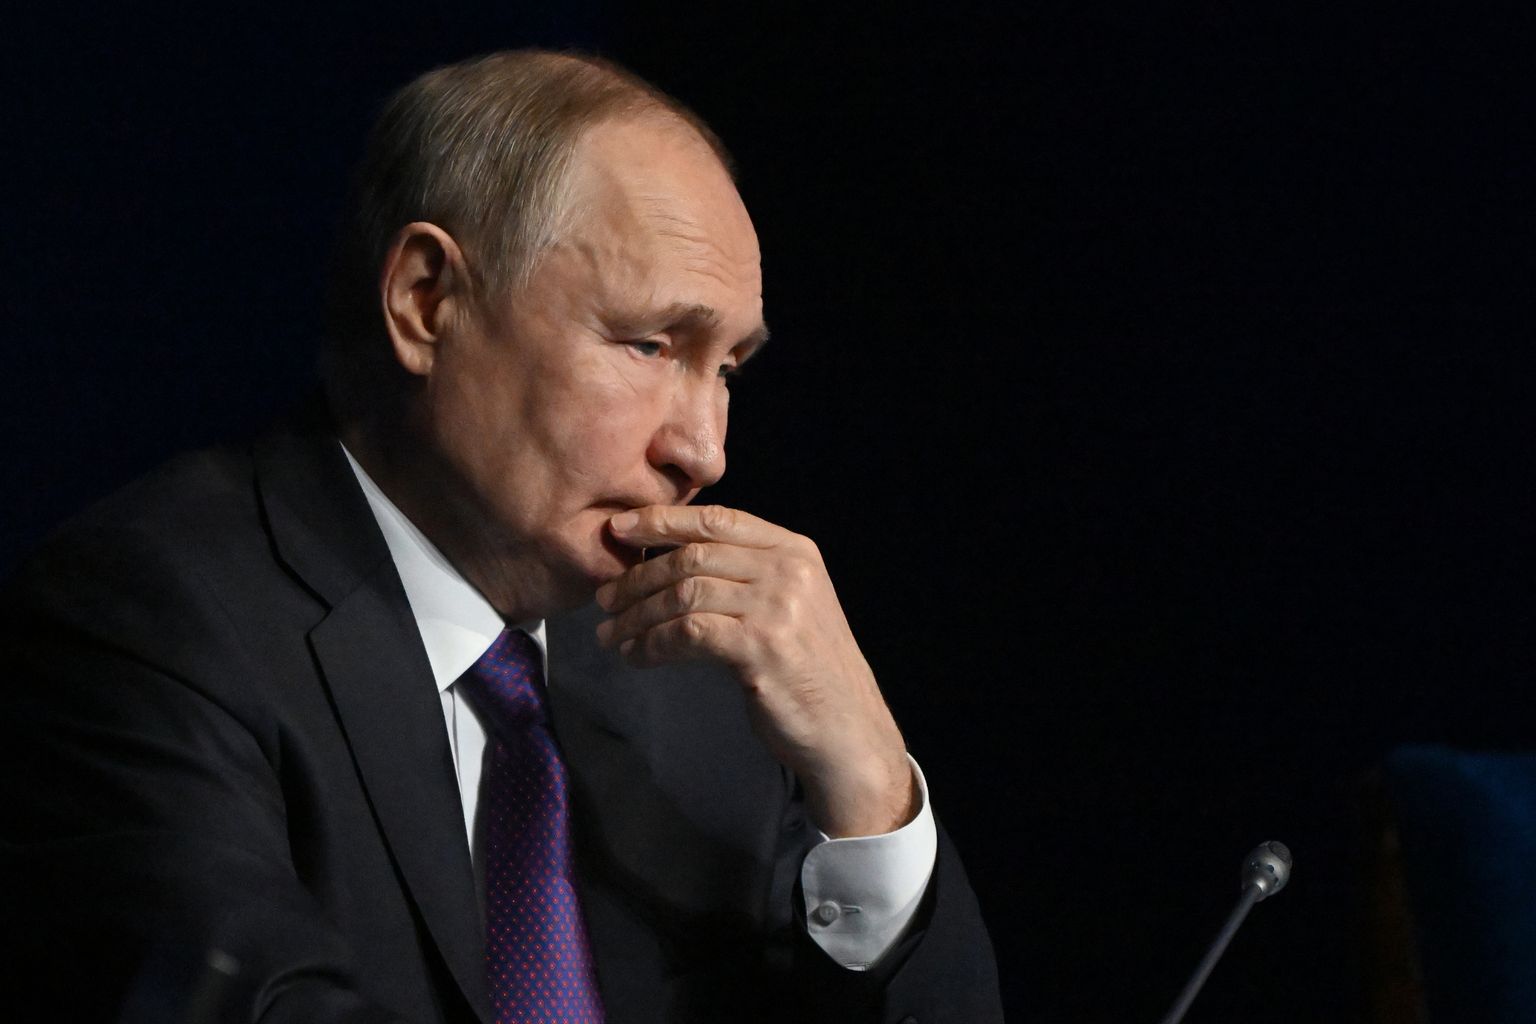 Venemaa president Vladimir Putin 29. novembril 2022 Moskvas 10. kohtunike kongressil ettekannet kuulamas